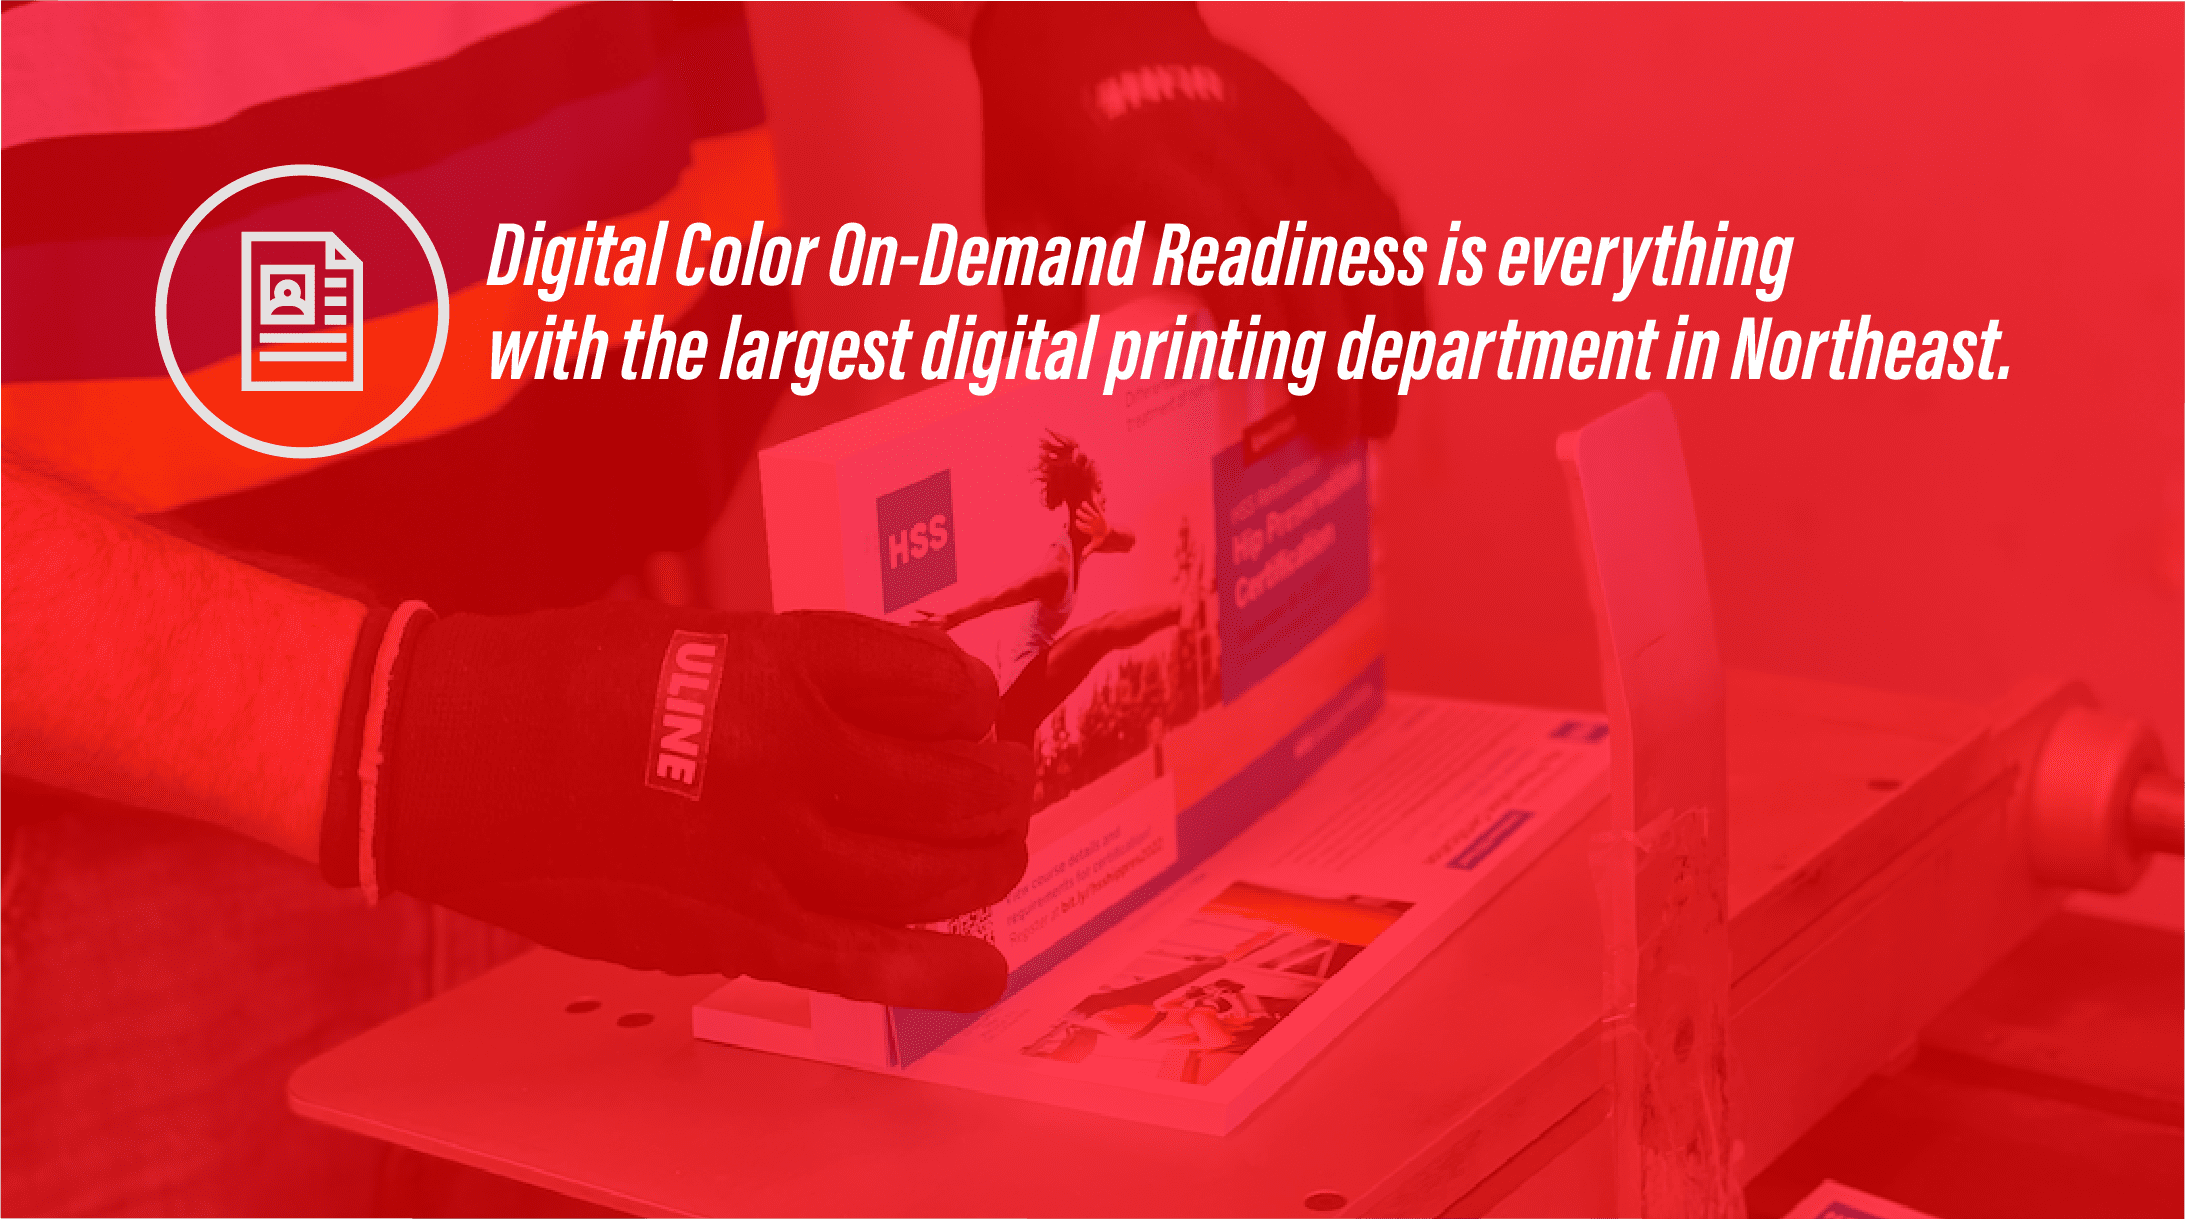 On-Demand Digital Printing